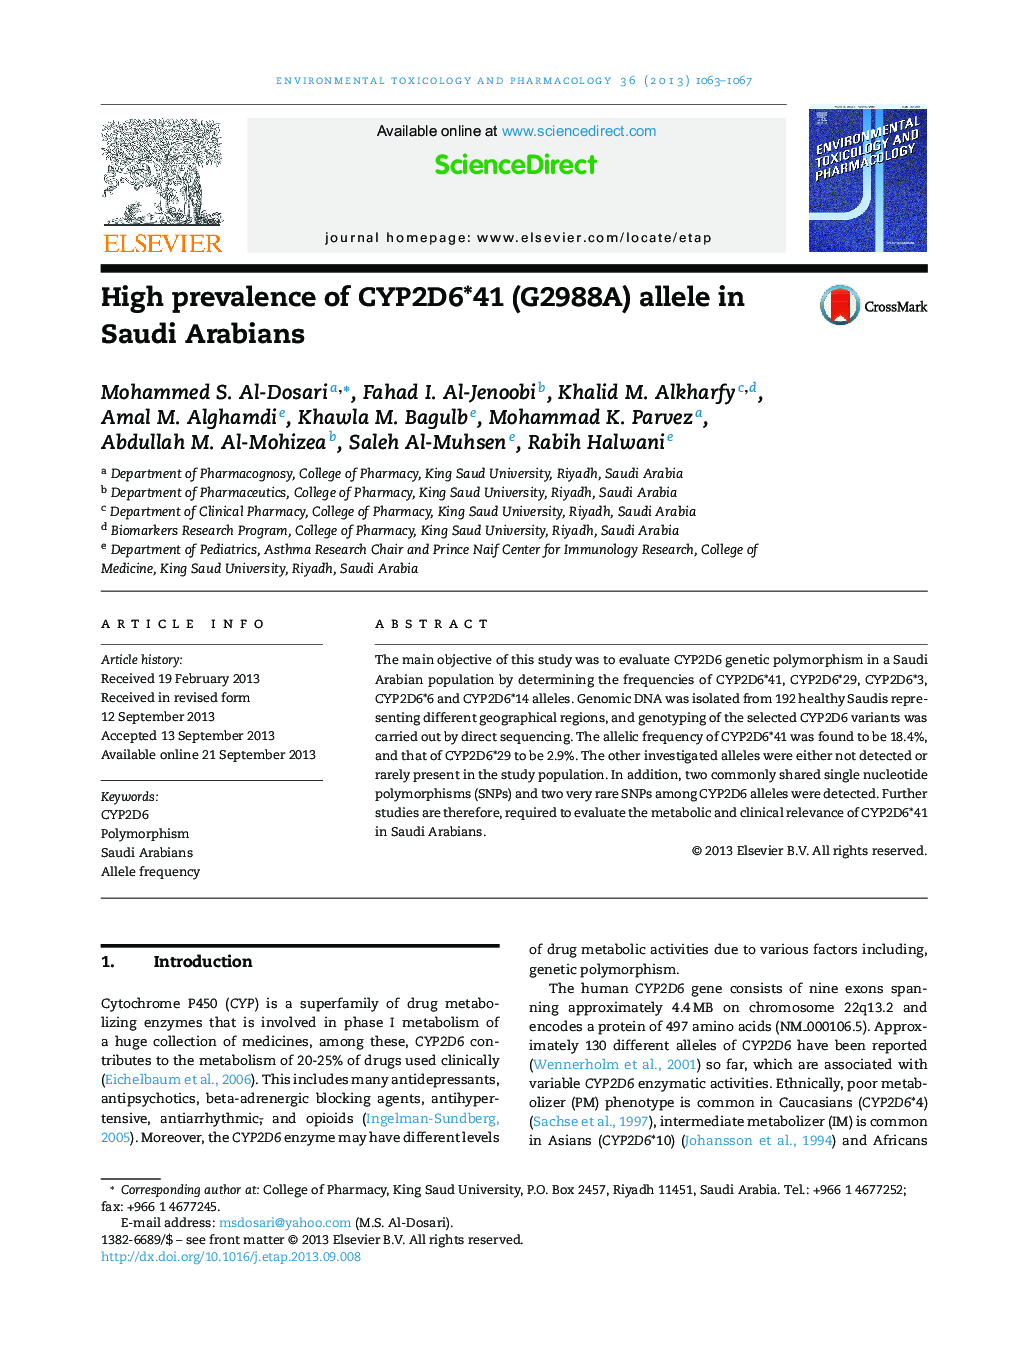 High prevalence of CYP2D6*41 (G2988A) allele in Saudi Arabians